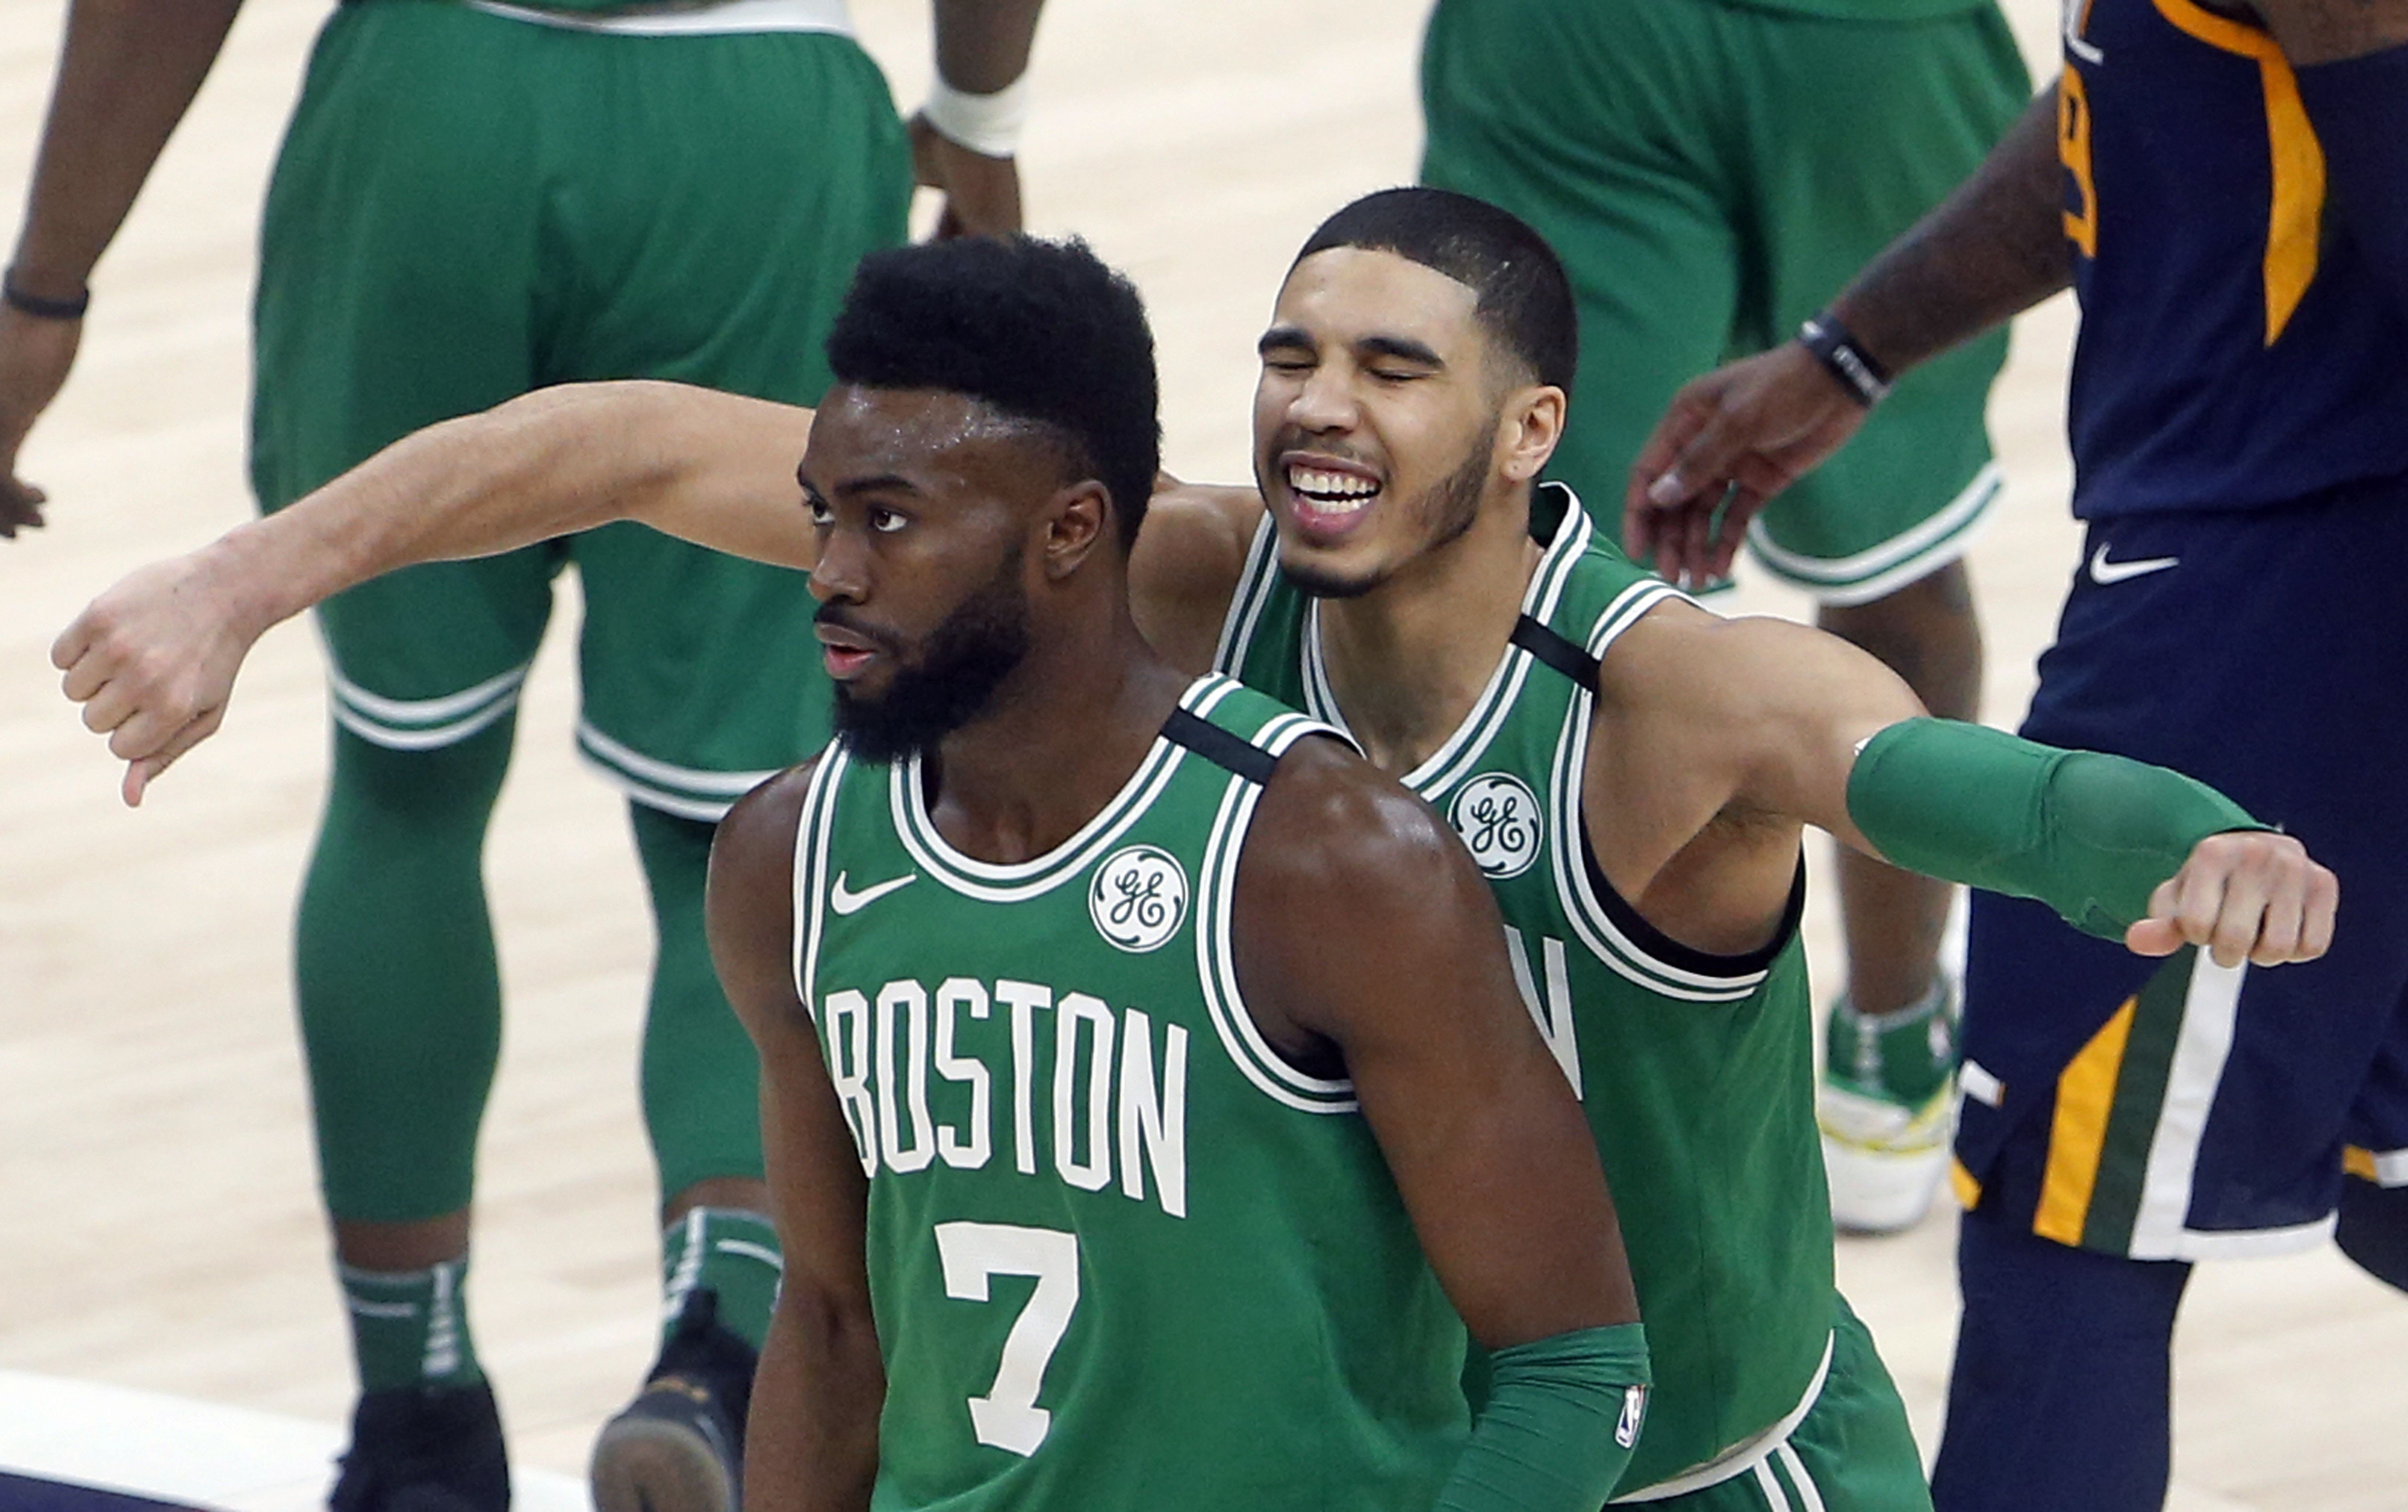 Celtics stars Tatum and Brown put on quite an All-Star show